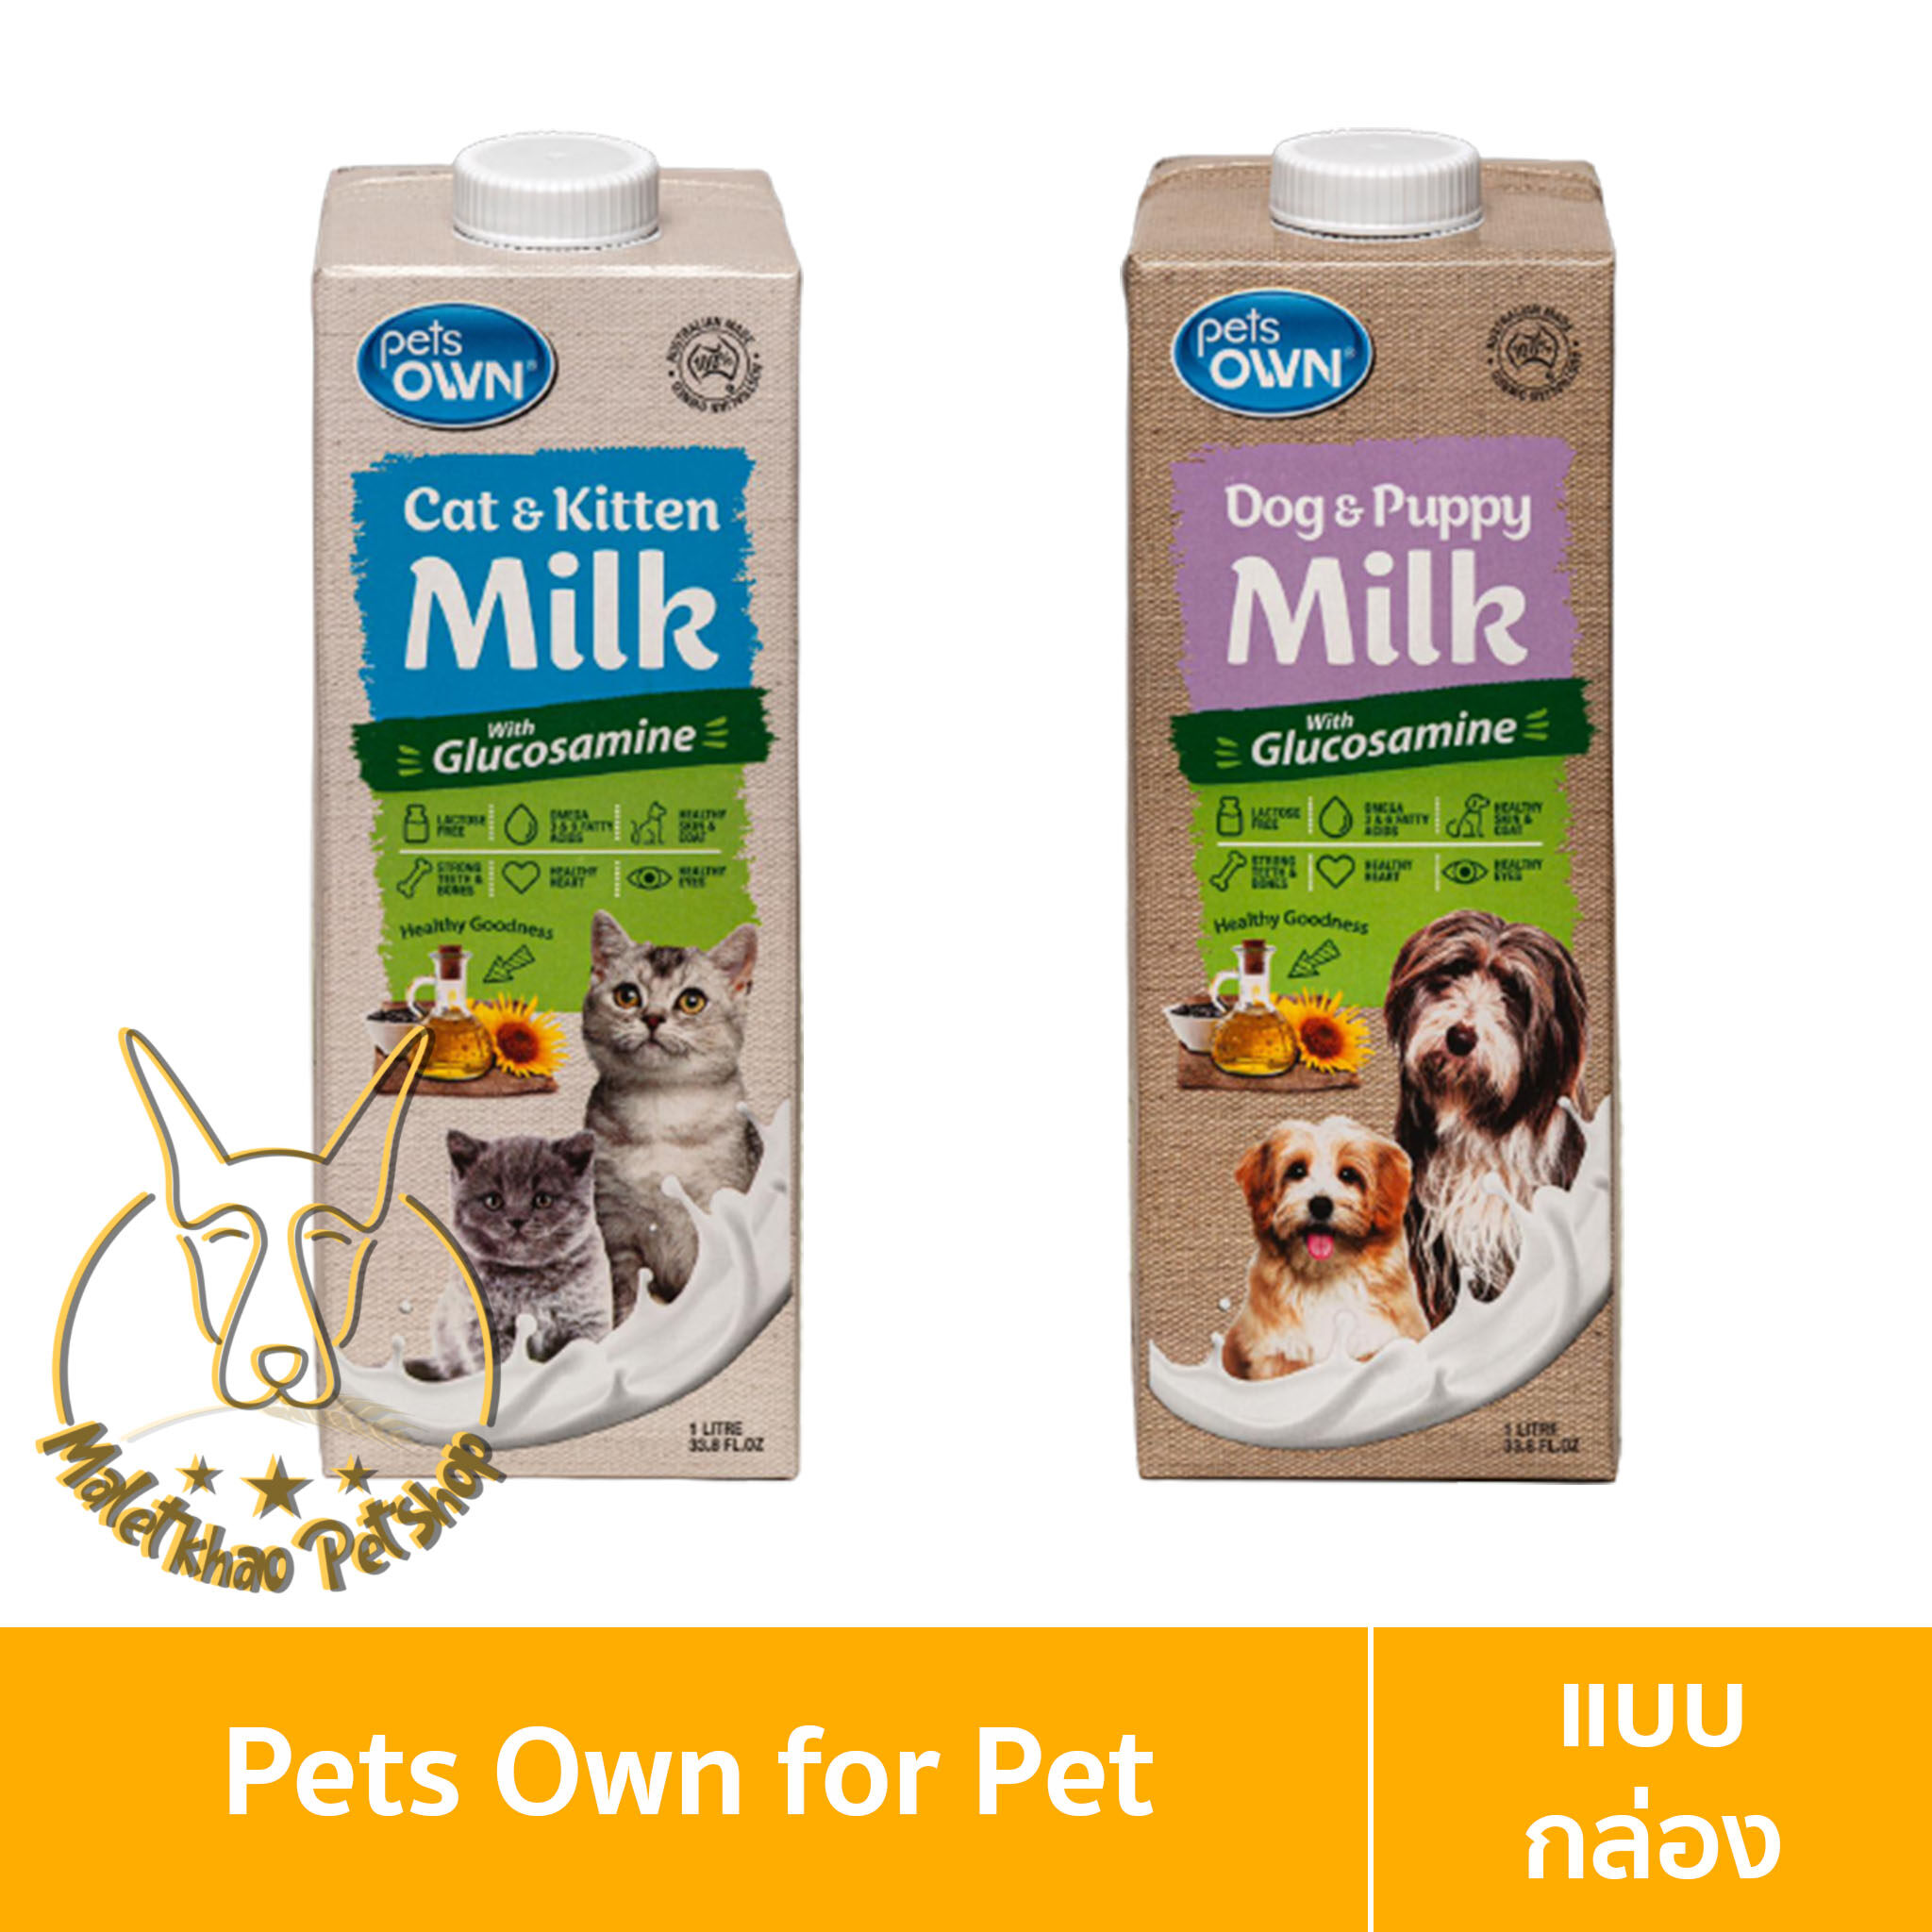 [MALETKHAO] Pets Own (เพ็ทส์ โอน) แบบกล่อง นมพร้อมดื่ม ปราสจากแลคโตส สำหรับลูกสุนัขหรือลูกแมว